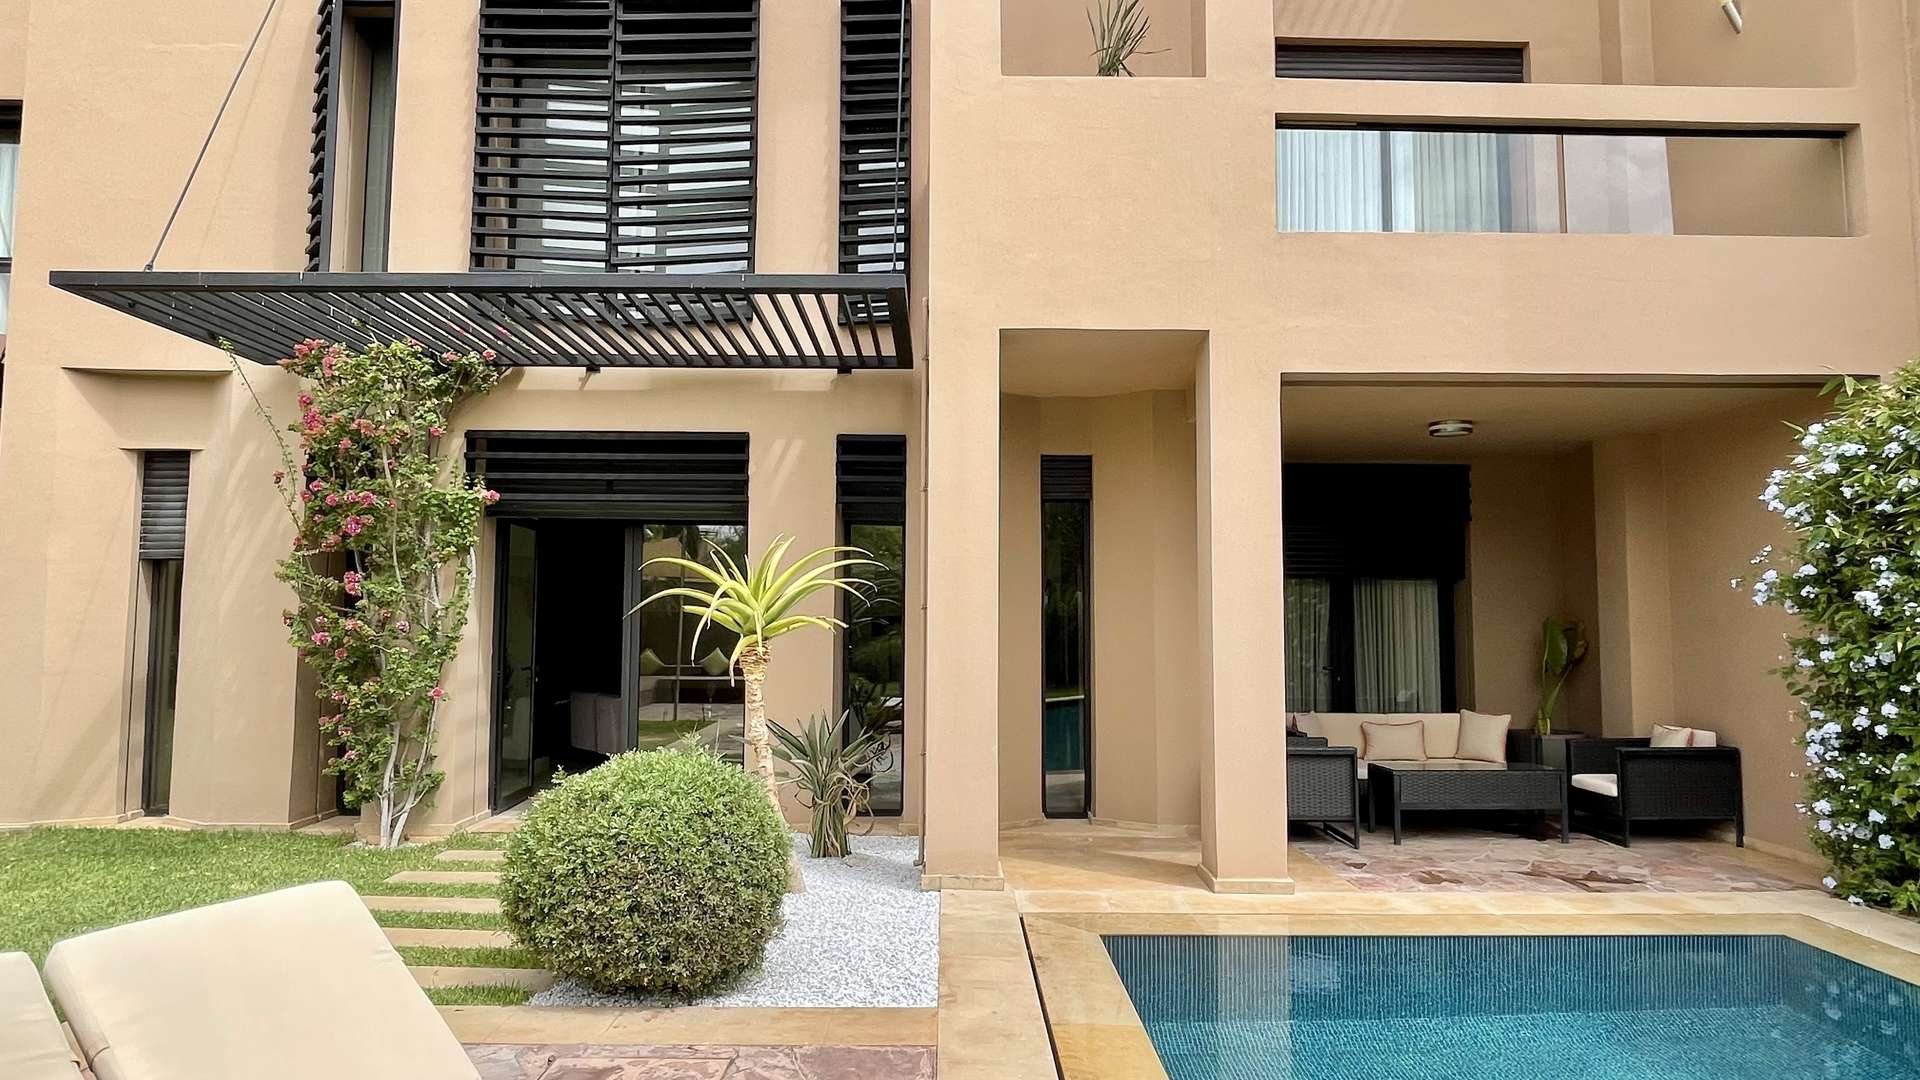 Vente,Villa,Magnifique Riad 4 chambres avec vue sur le golf d'Al Maaden à Marrakech,Marrakech,Golf Al Maaden